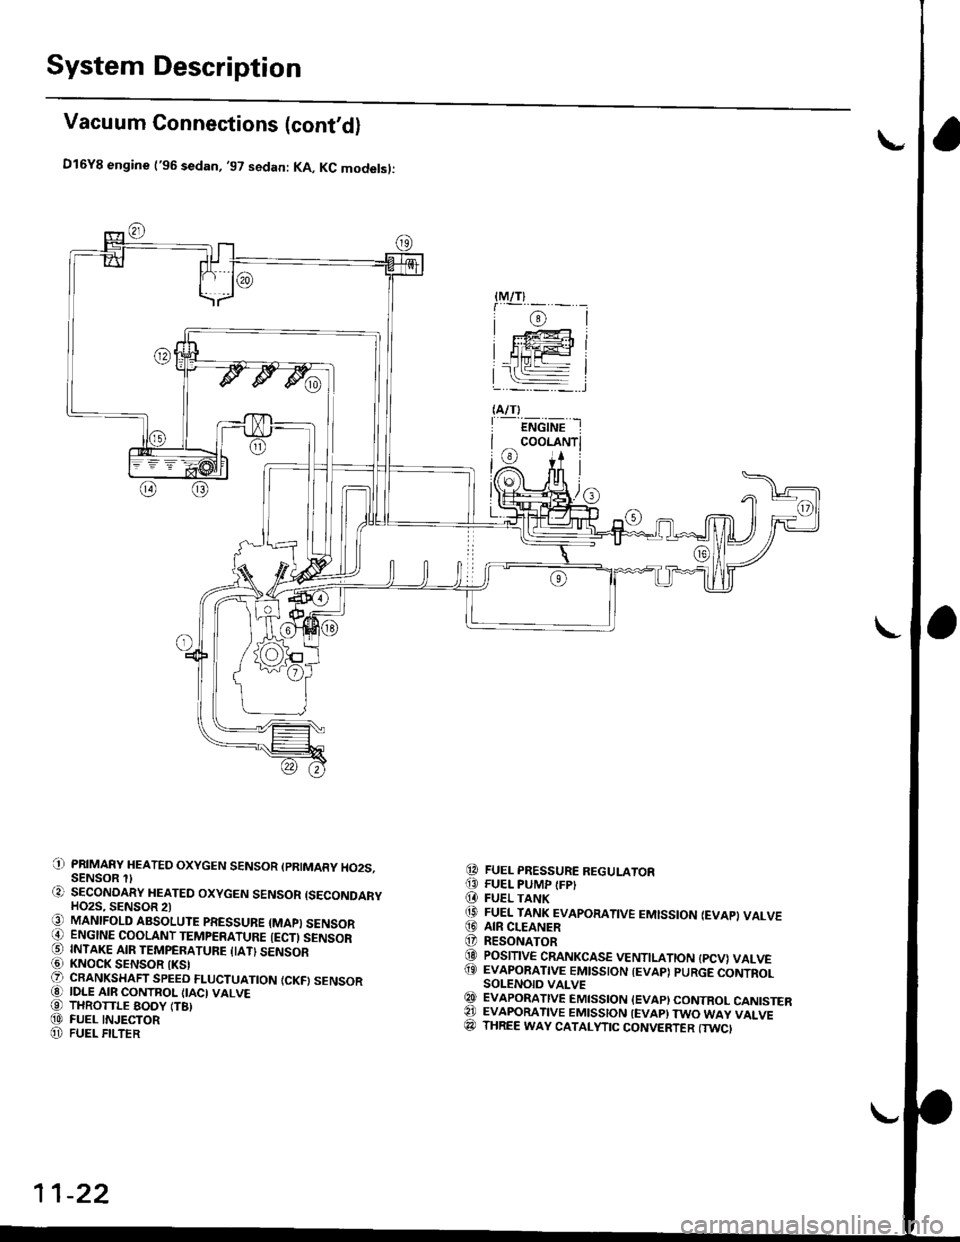 HONDA CIVIC 1999 6.G Workshop Manual System Description
Vacuum Connections (contd)
D16Y8 engine (96 sedan, 97 sedan: KA, KC modelsl:
PRIMARY HEATED OXYGEN SENSOR (PRIMARY HO2S.SENSOR  SECONOARY HEATED OXYGEN SENSOR {SECONDARYHO2S, SEN